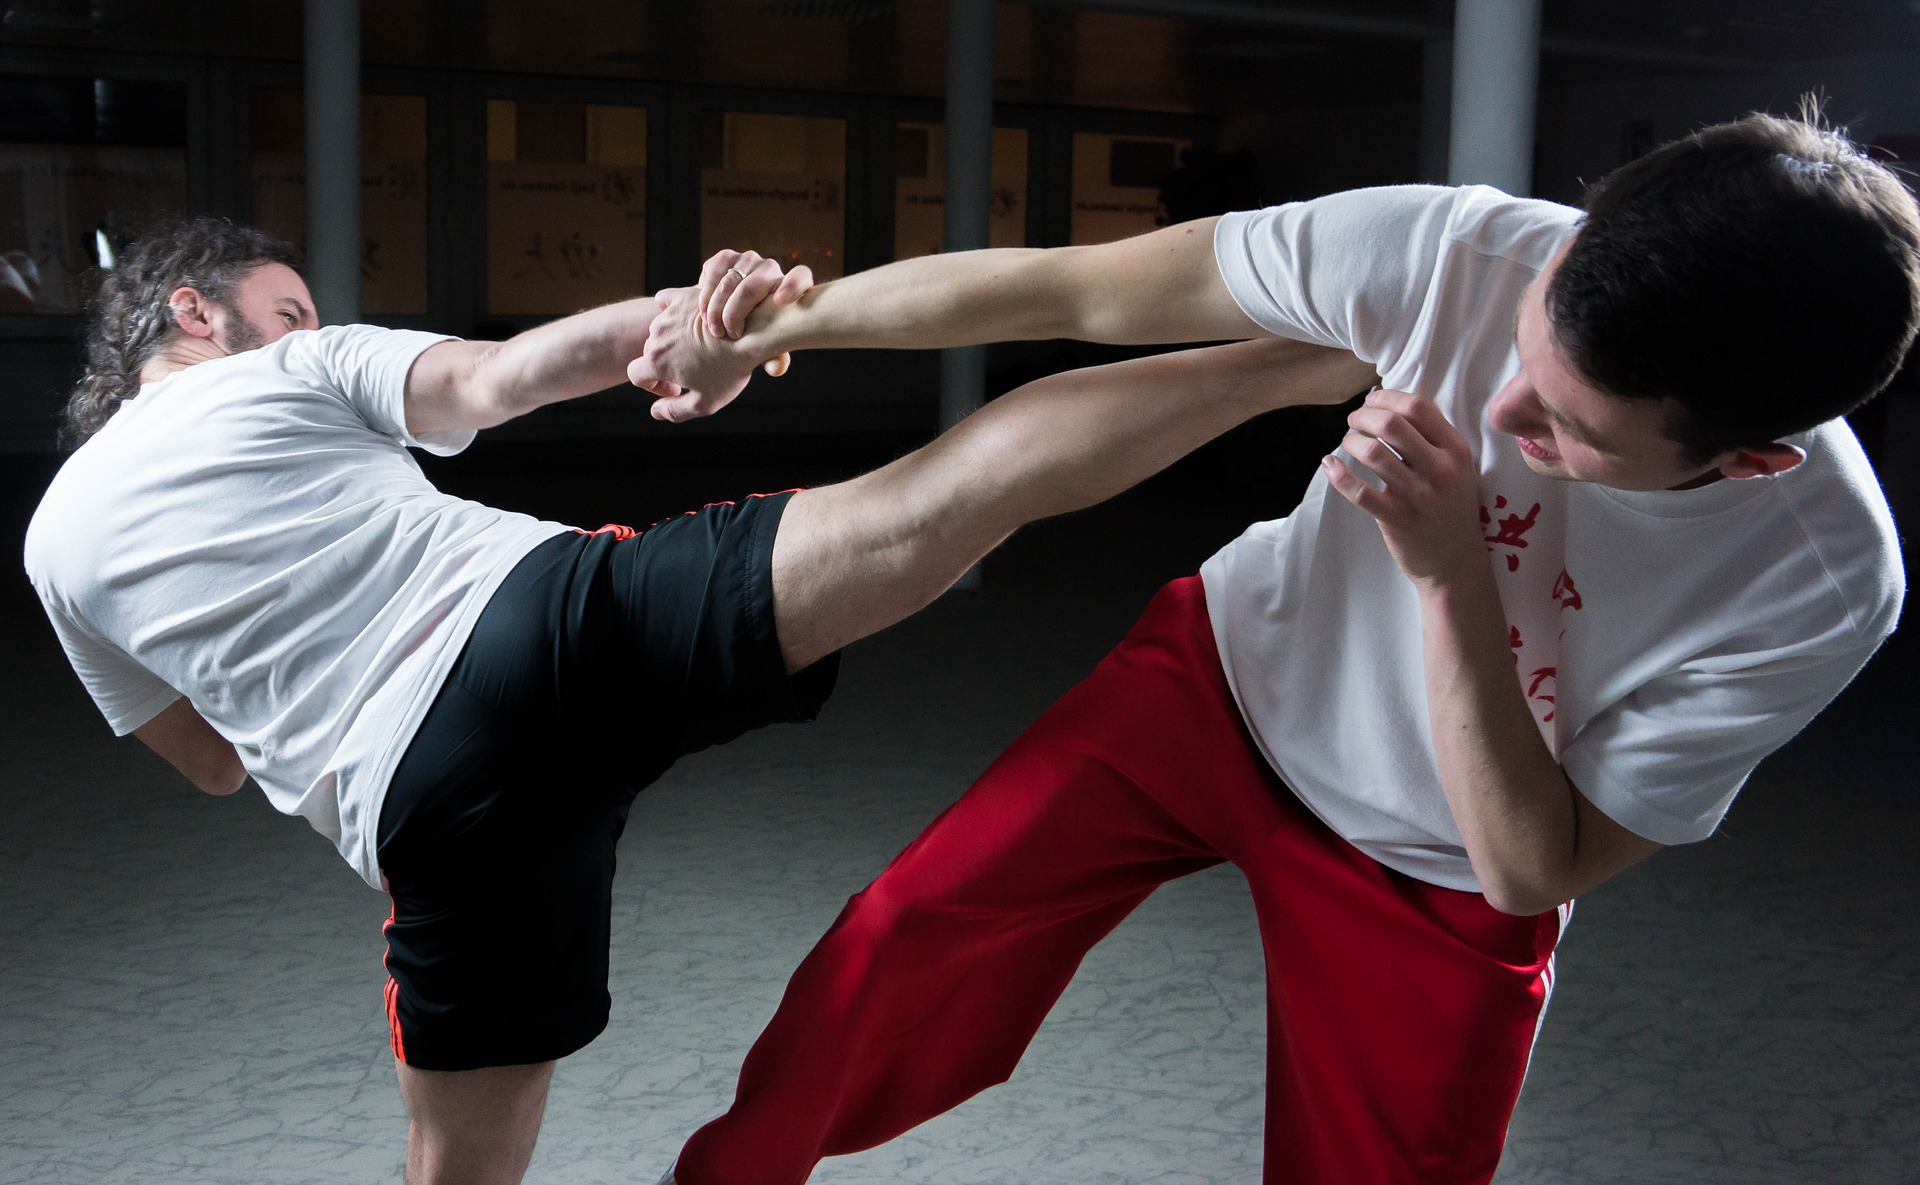 basic karate moves for self defense